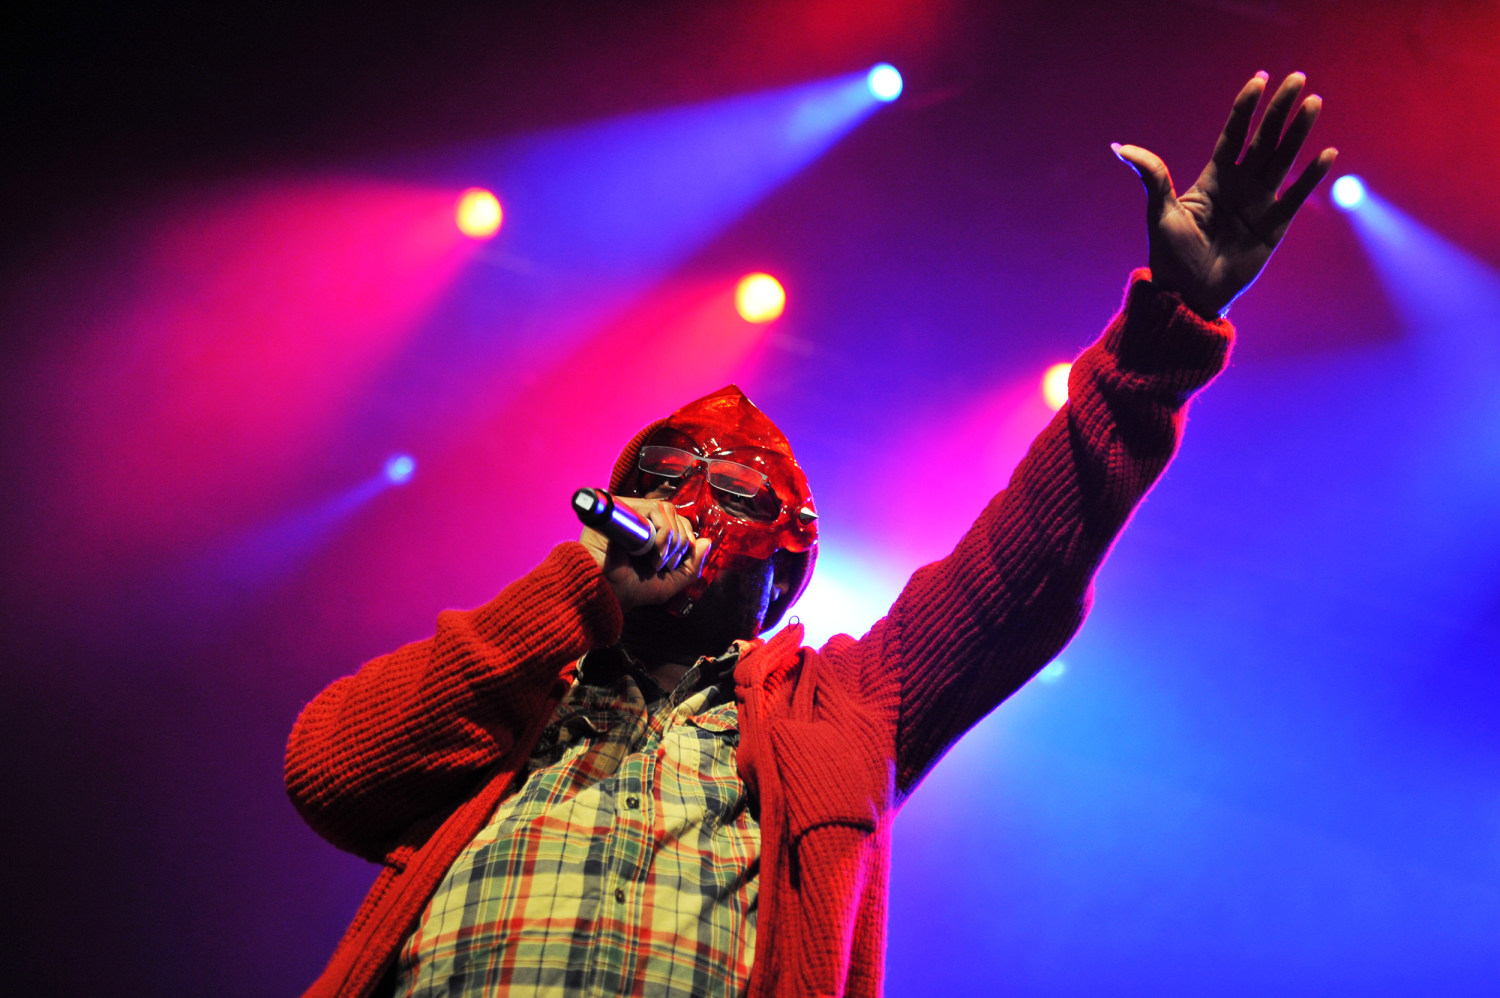 MF DOOM, masked rapper known for complex lyrics, dies at 49